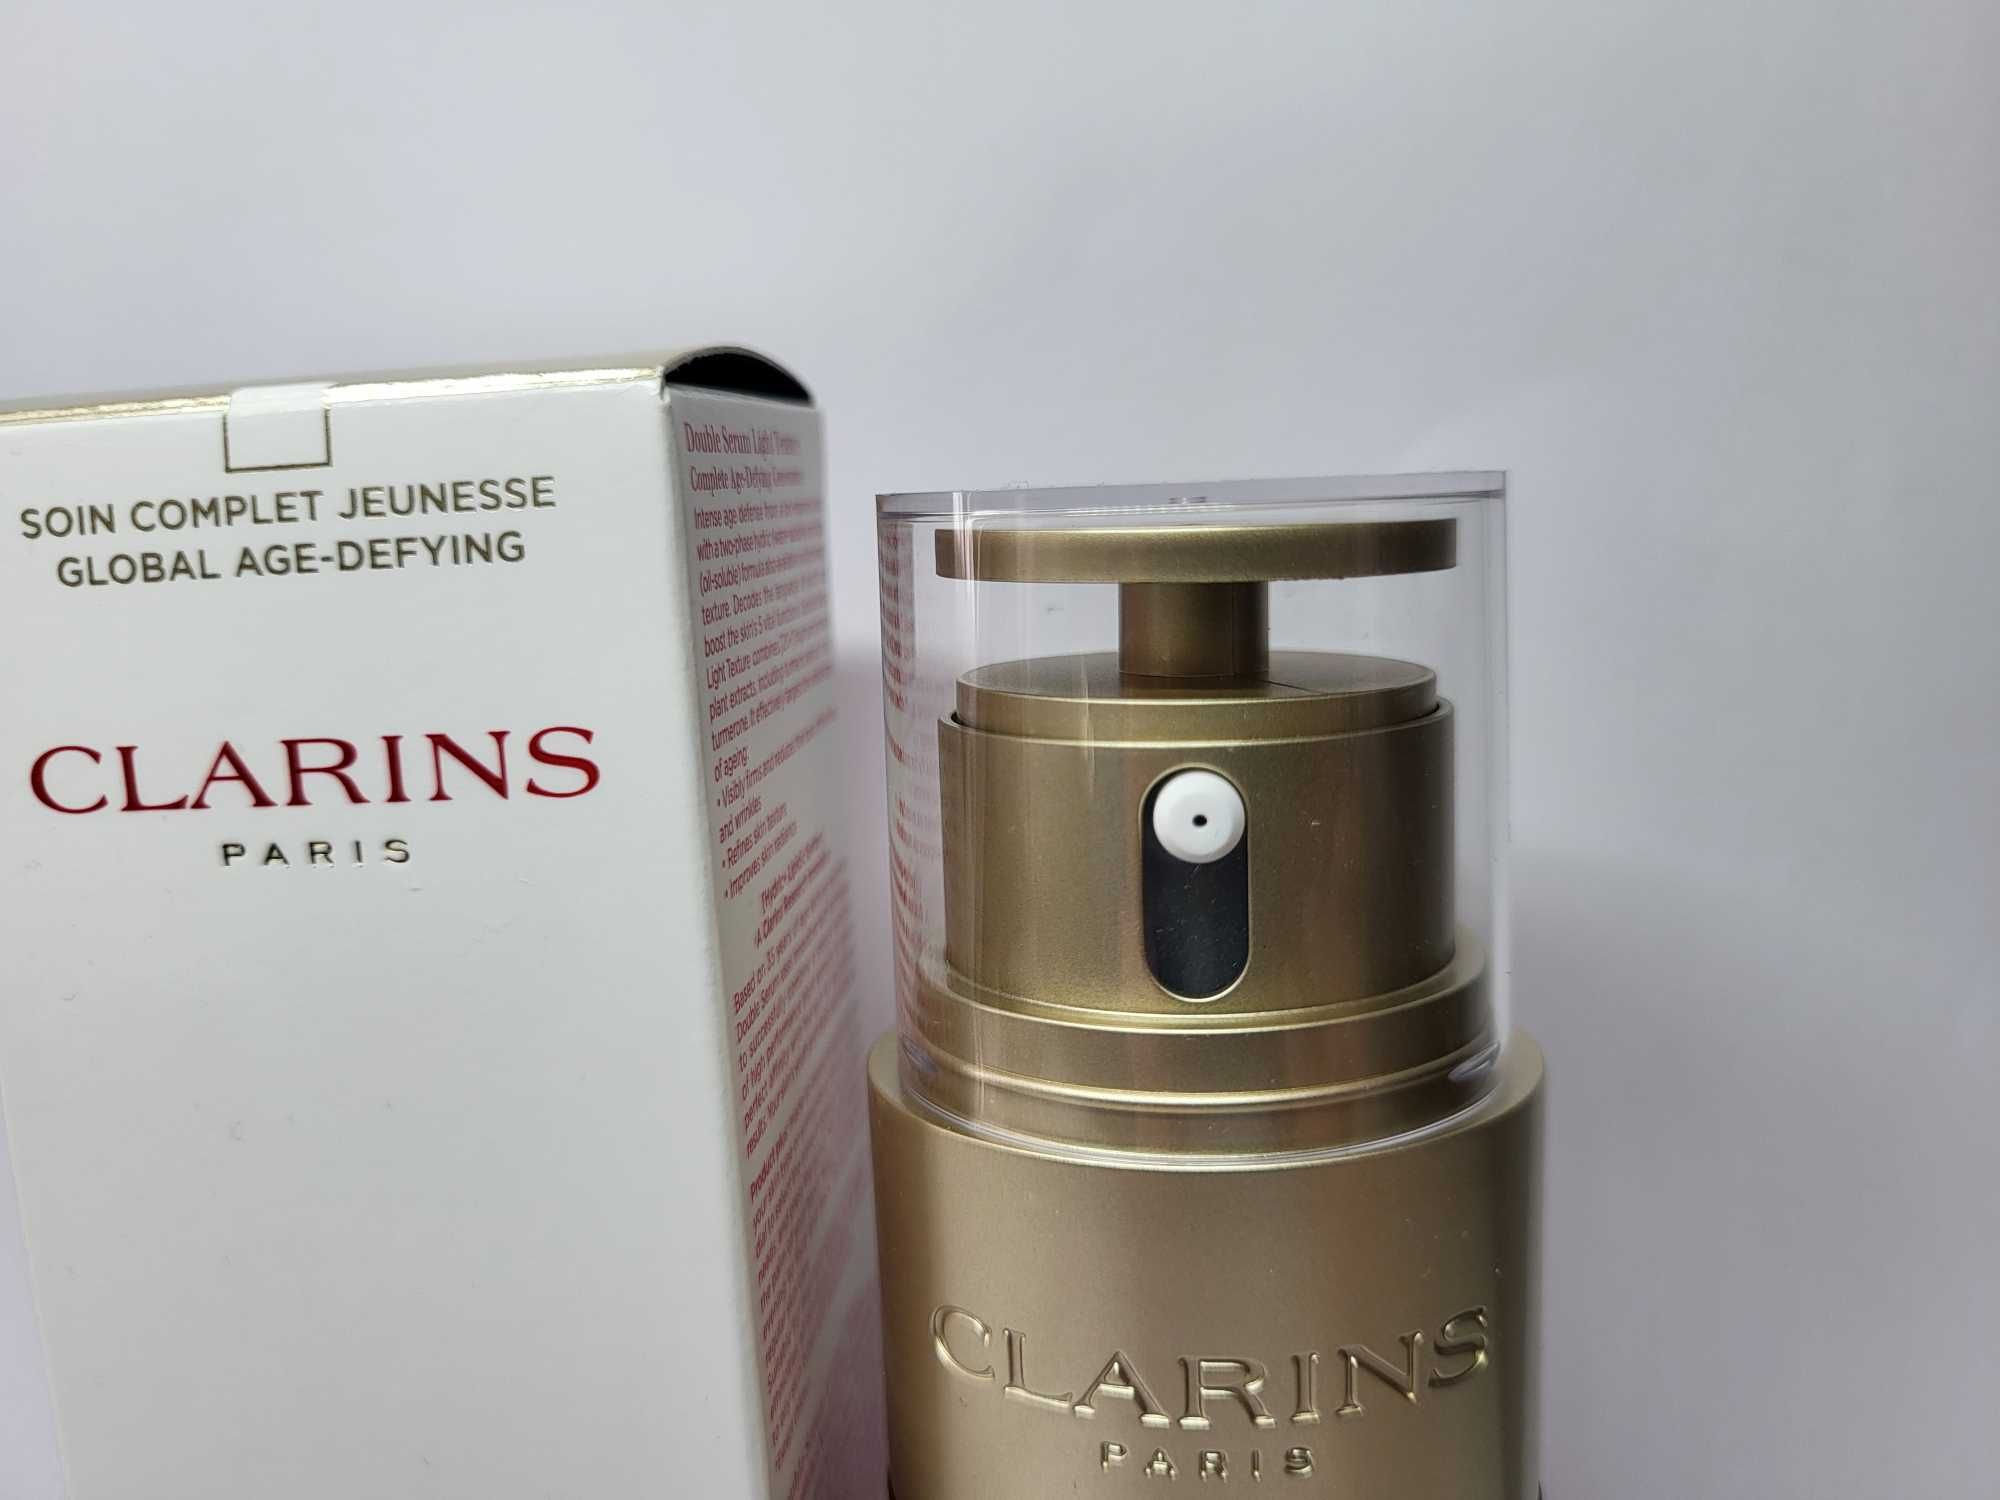 Clarins Double Serum Light Texture